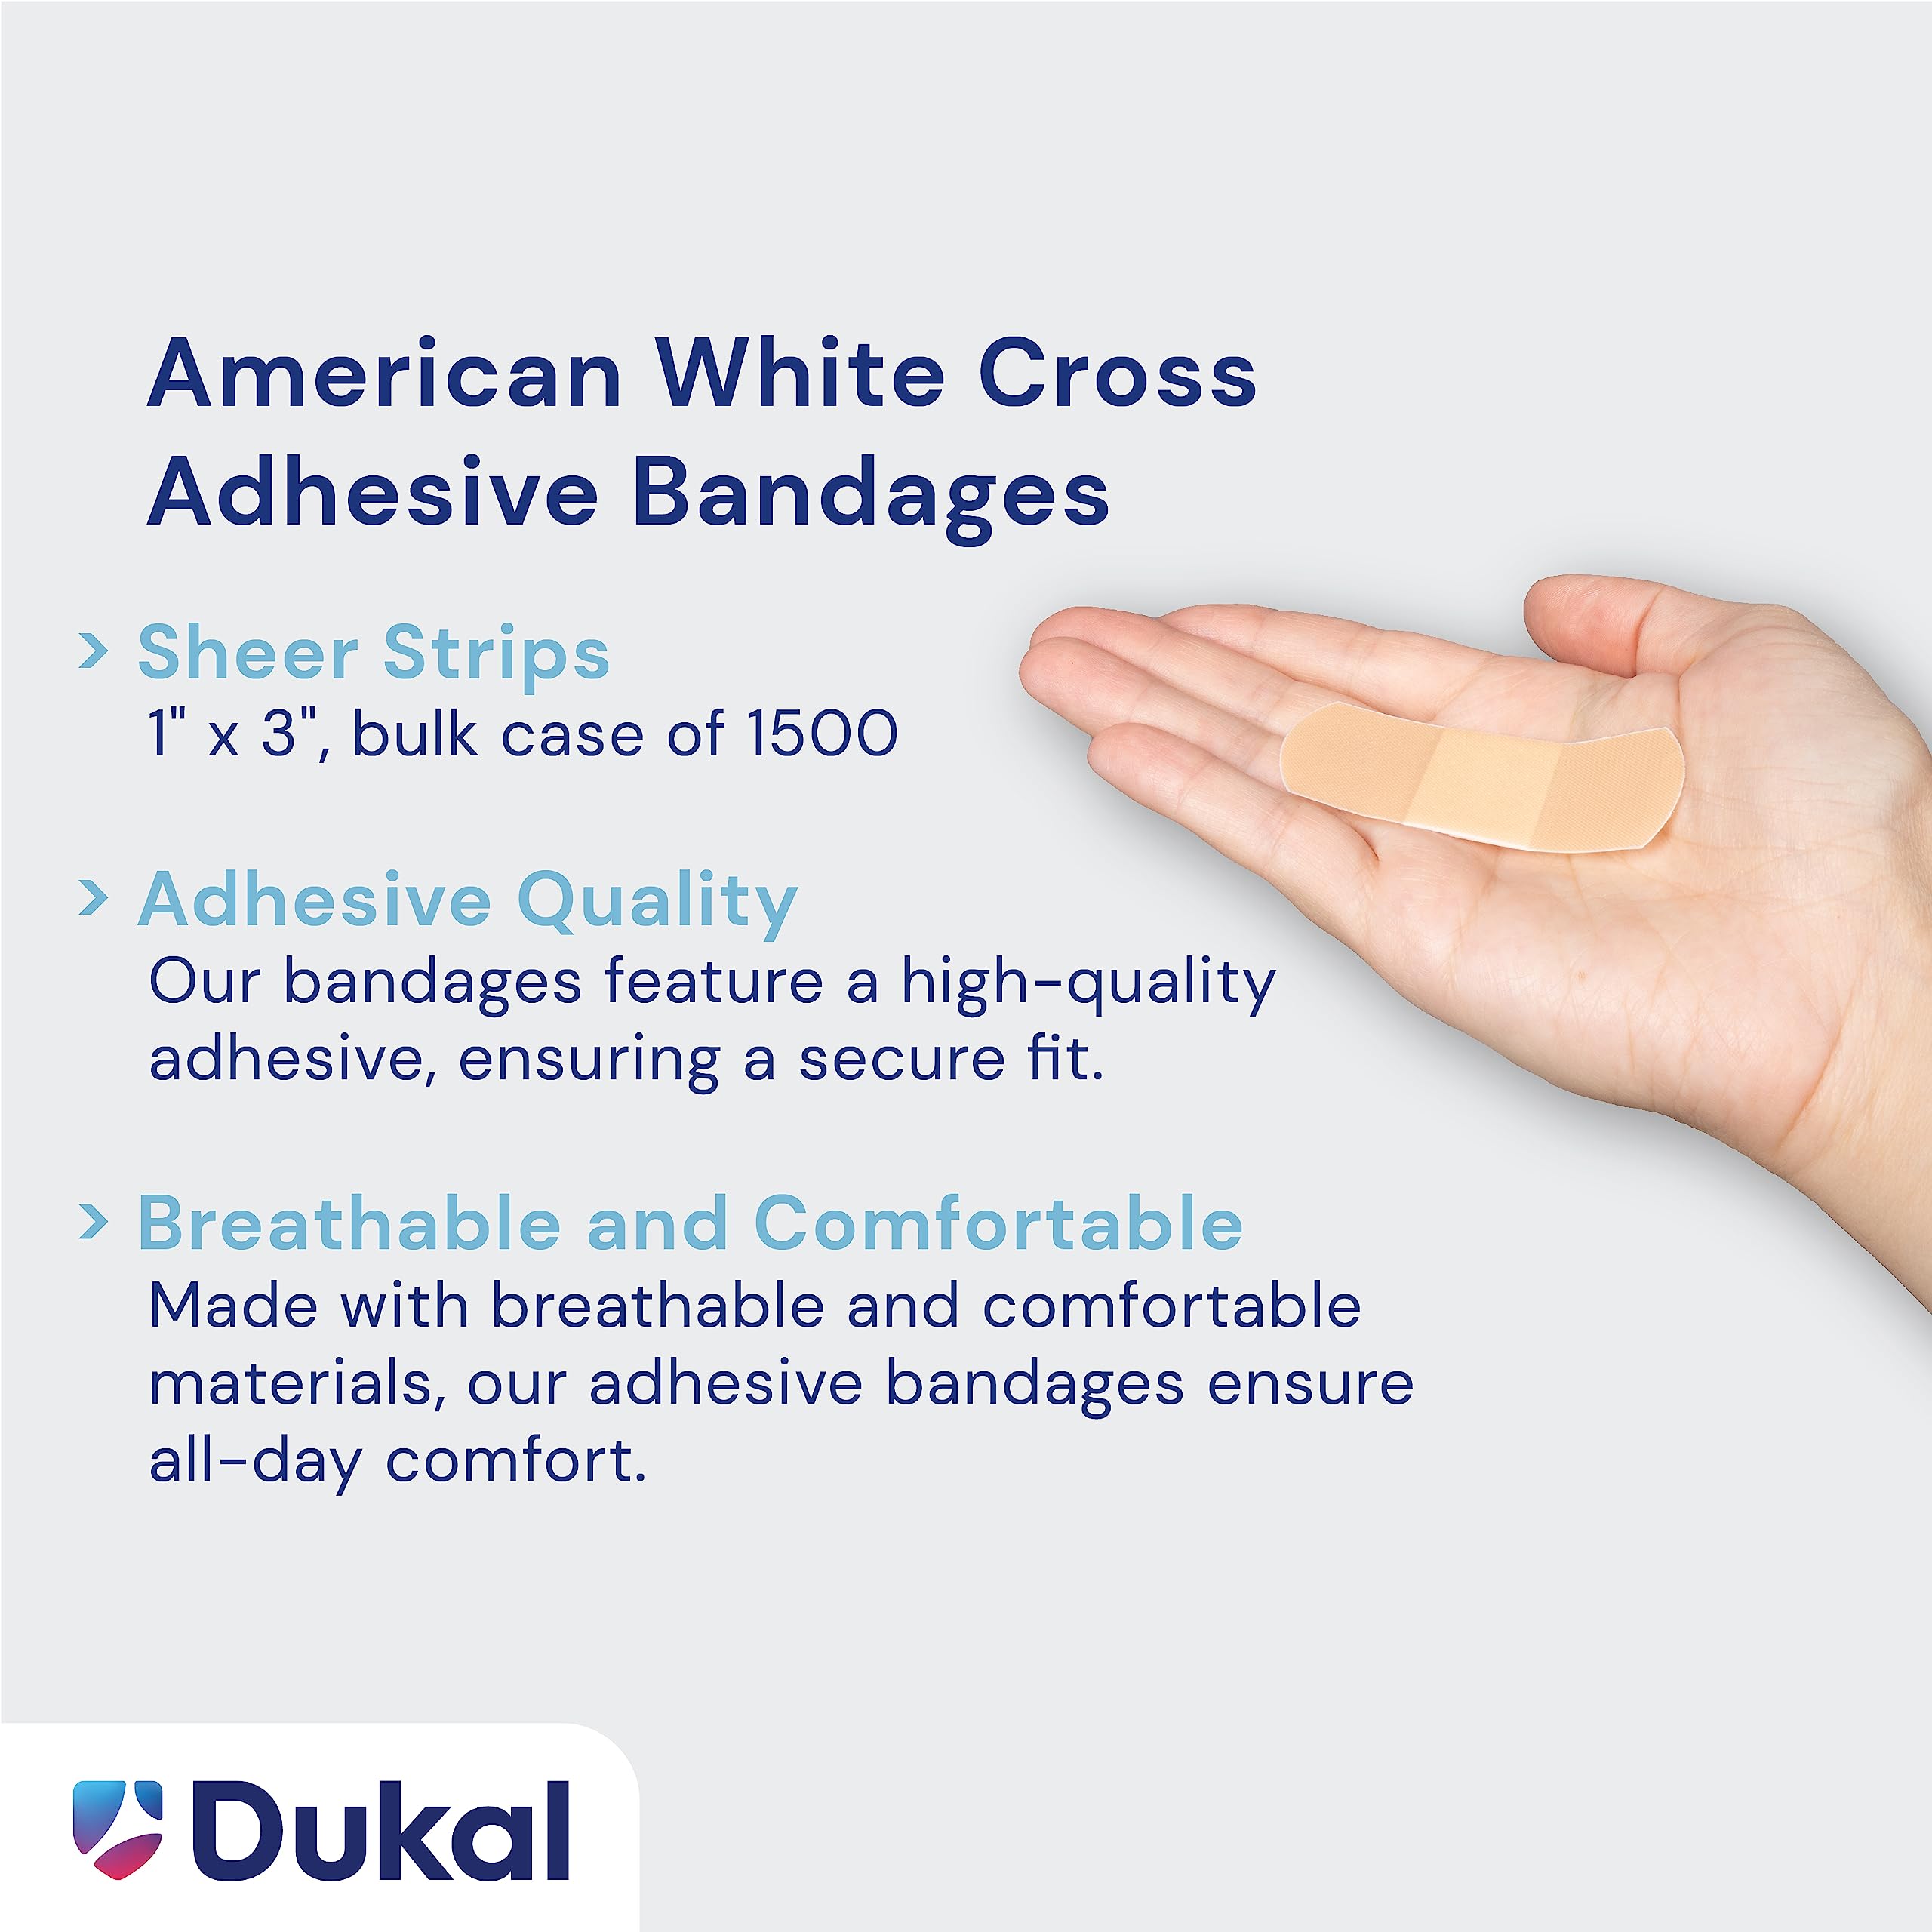 American White Cross Adhesive Bandages, Sheer Strips, 1